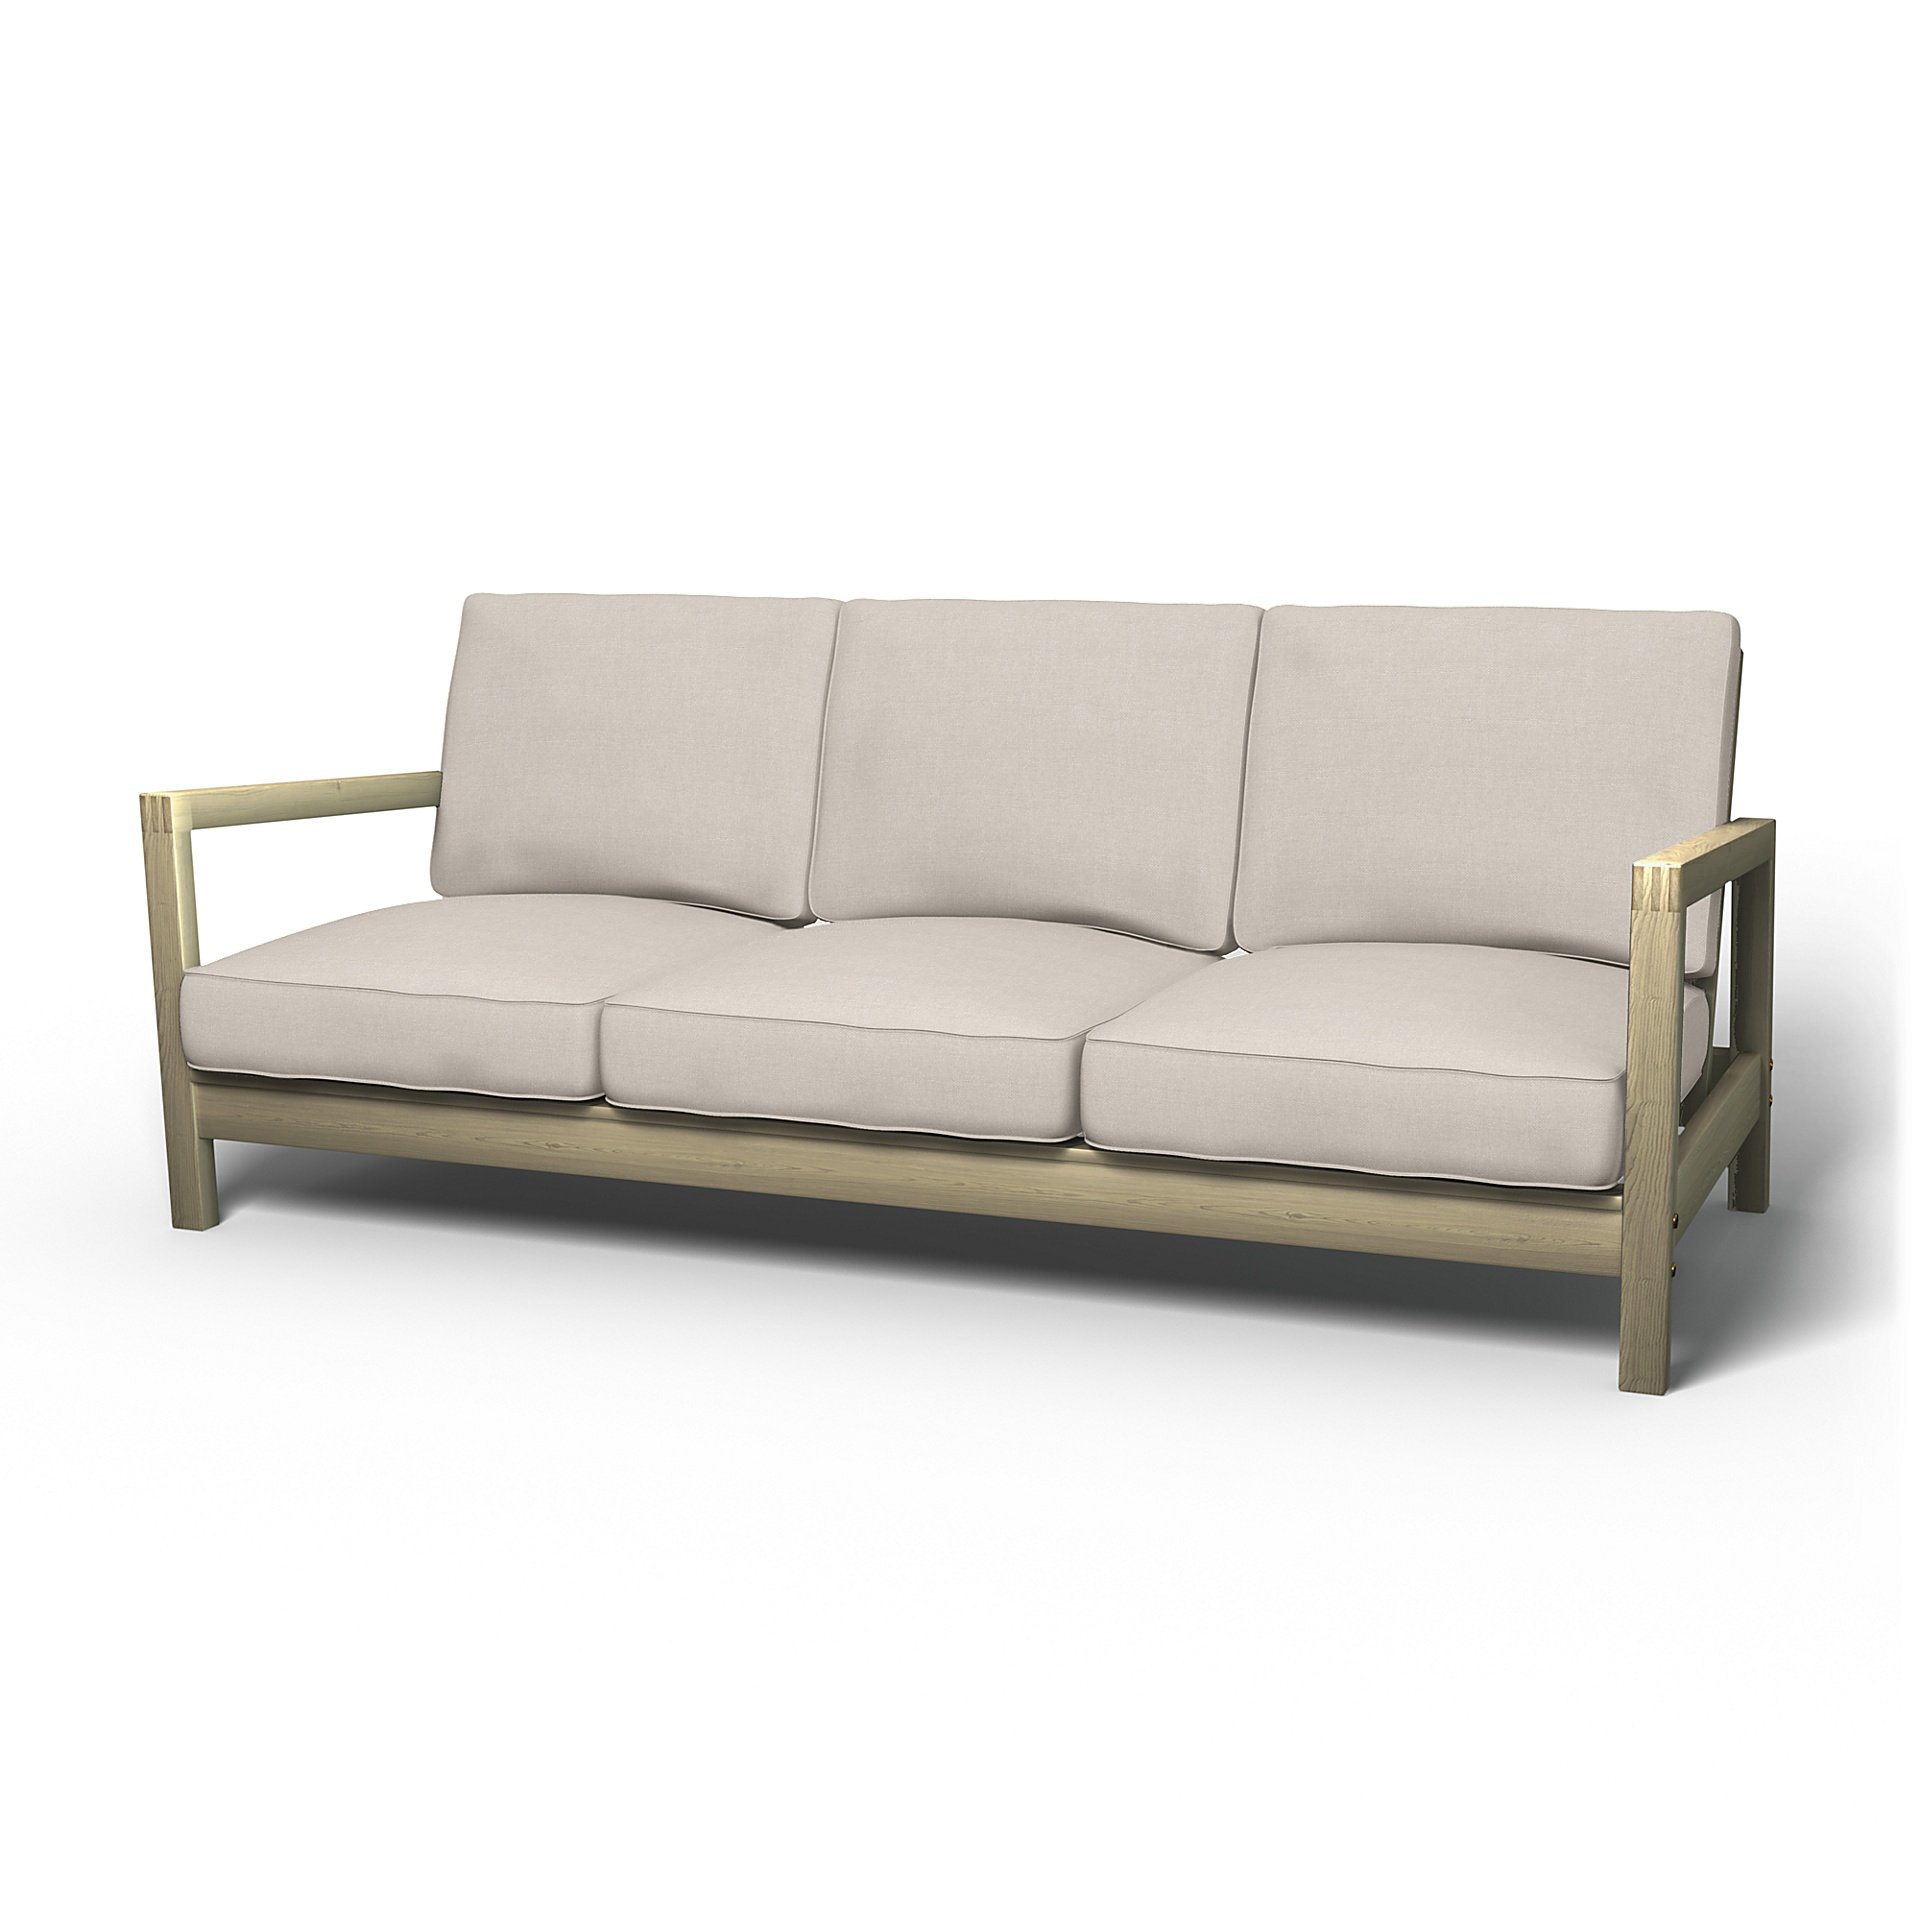 IKEA - Lillberg 3 Seater Sofa Cover, Chalk, Linen - Bemz